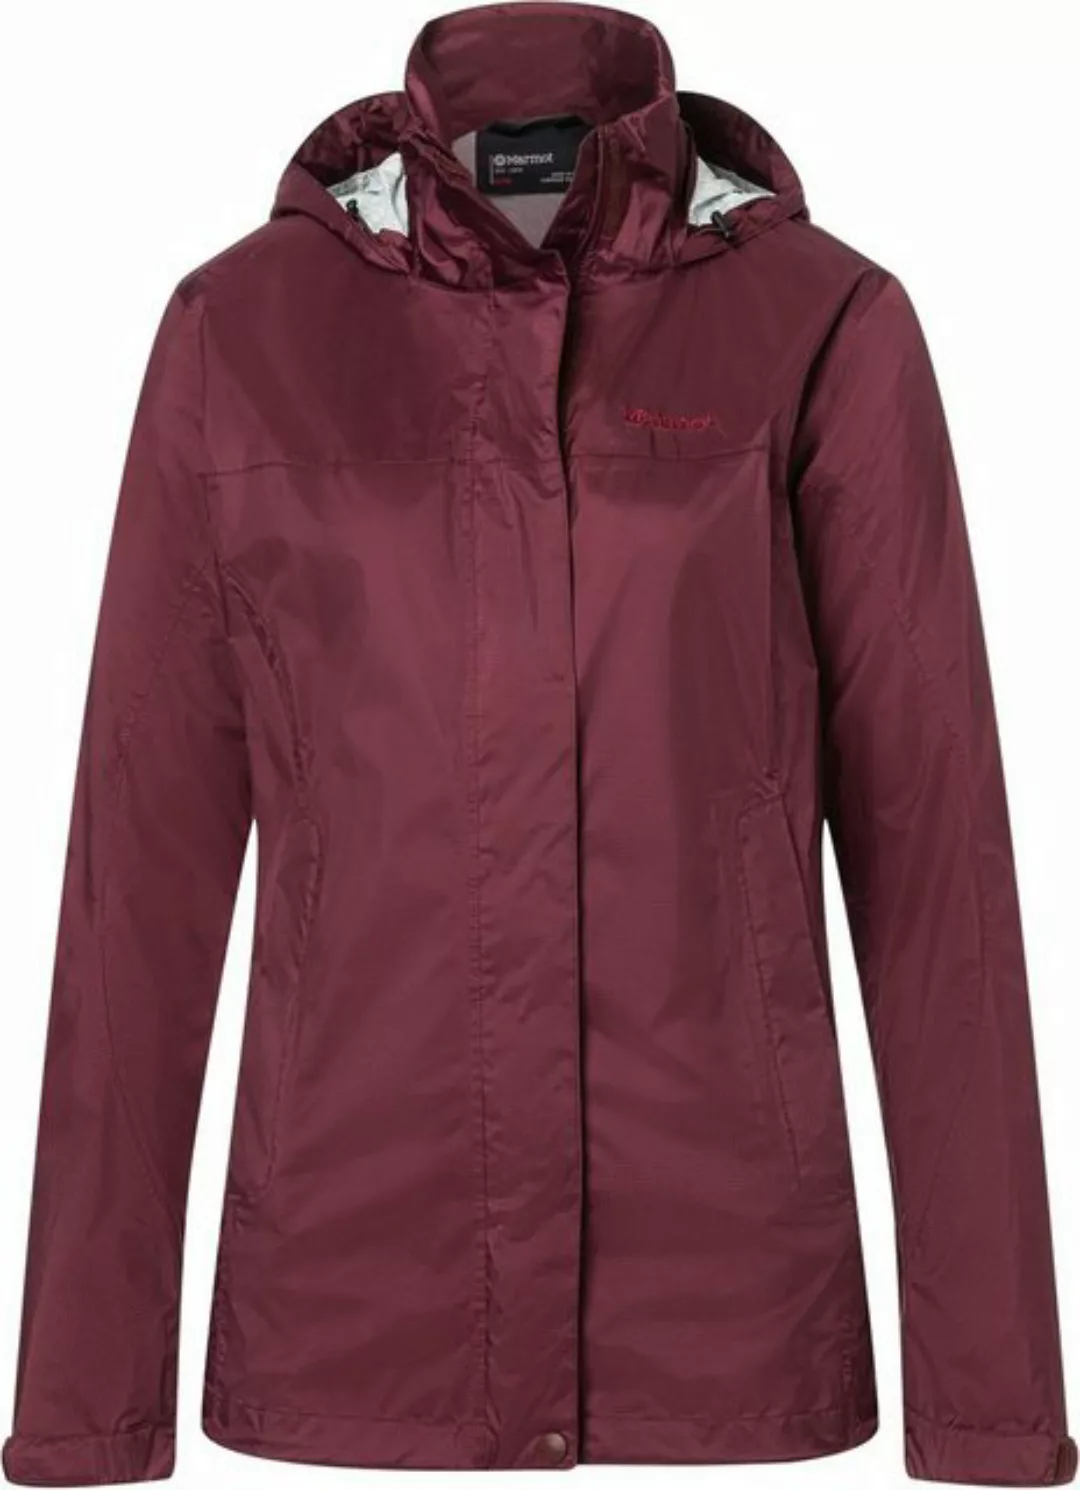 Marmot Outdoorjacke Womens PreCip Eco Jacket günstig online kaufen